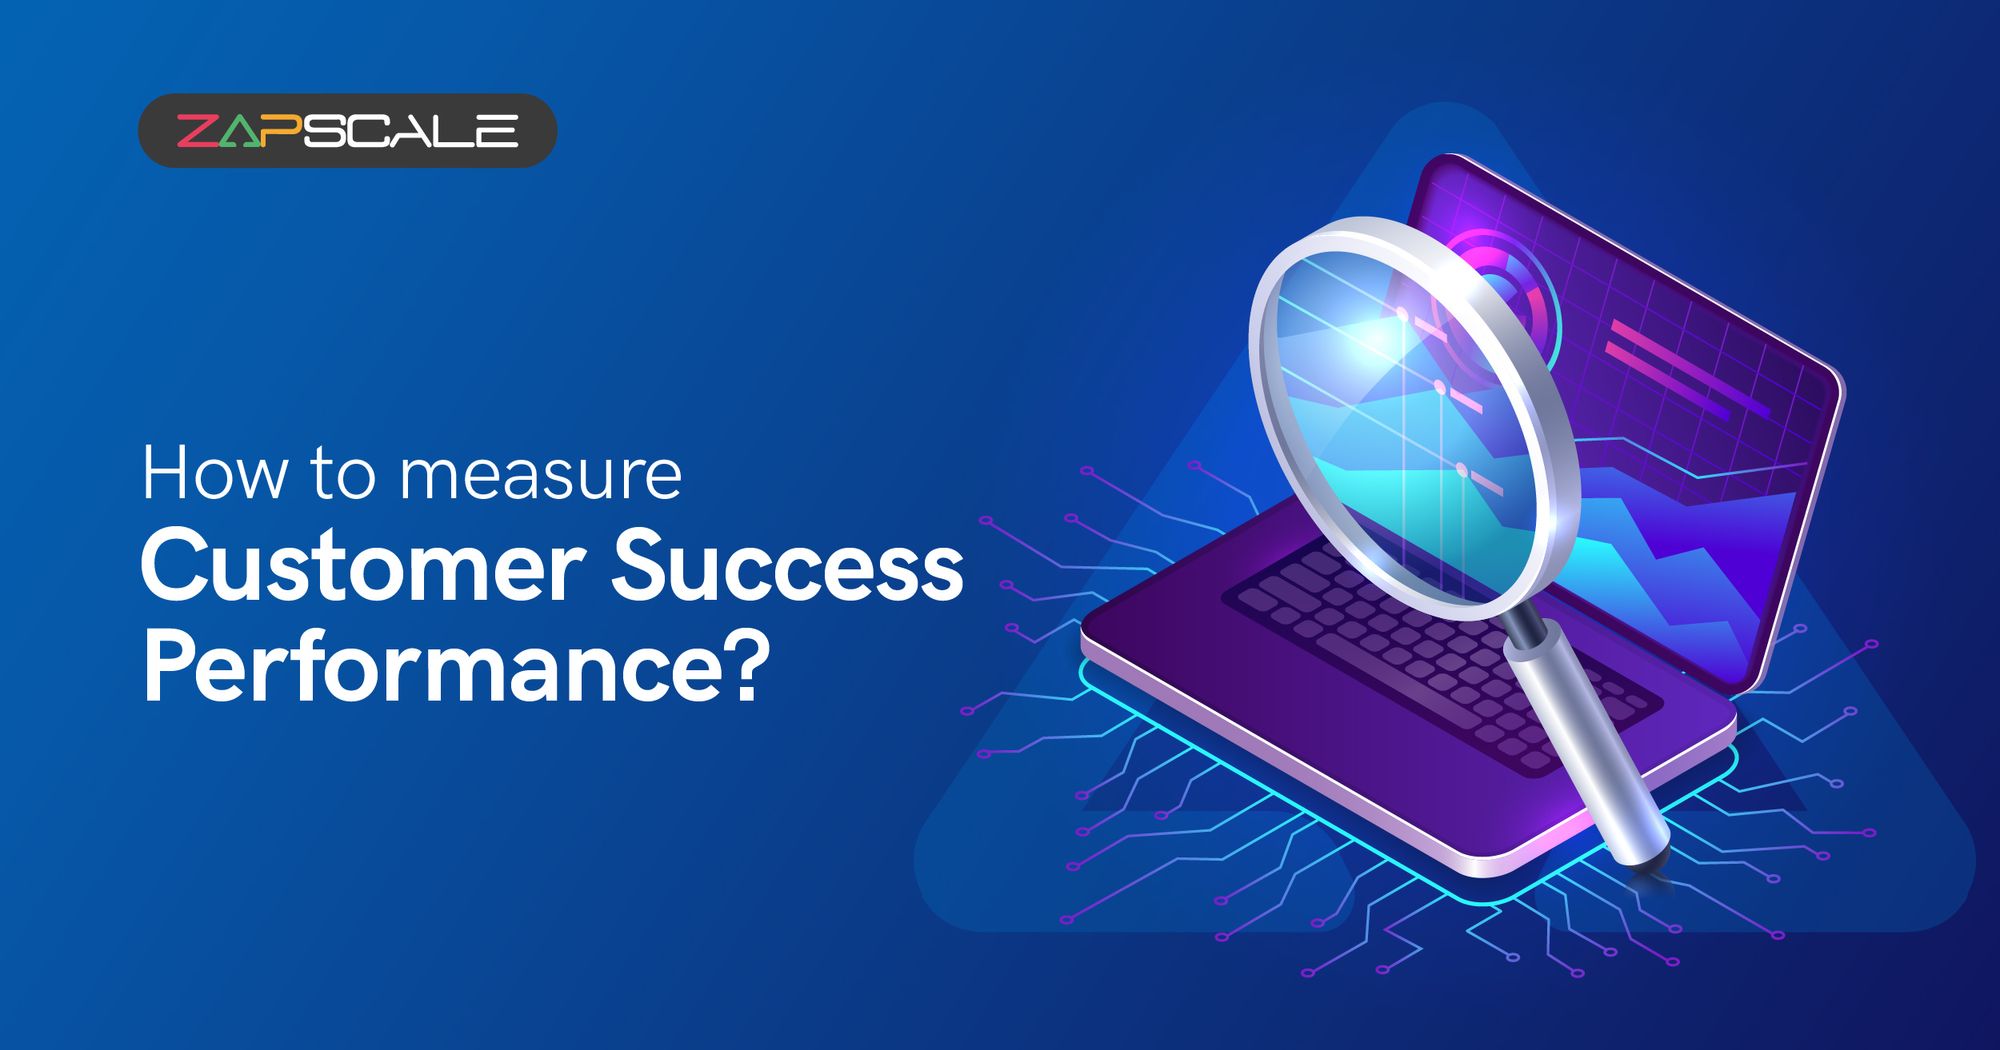 How do you measure Customer Success performance?